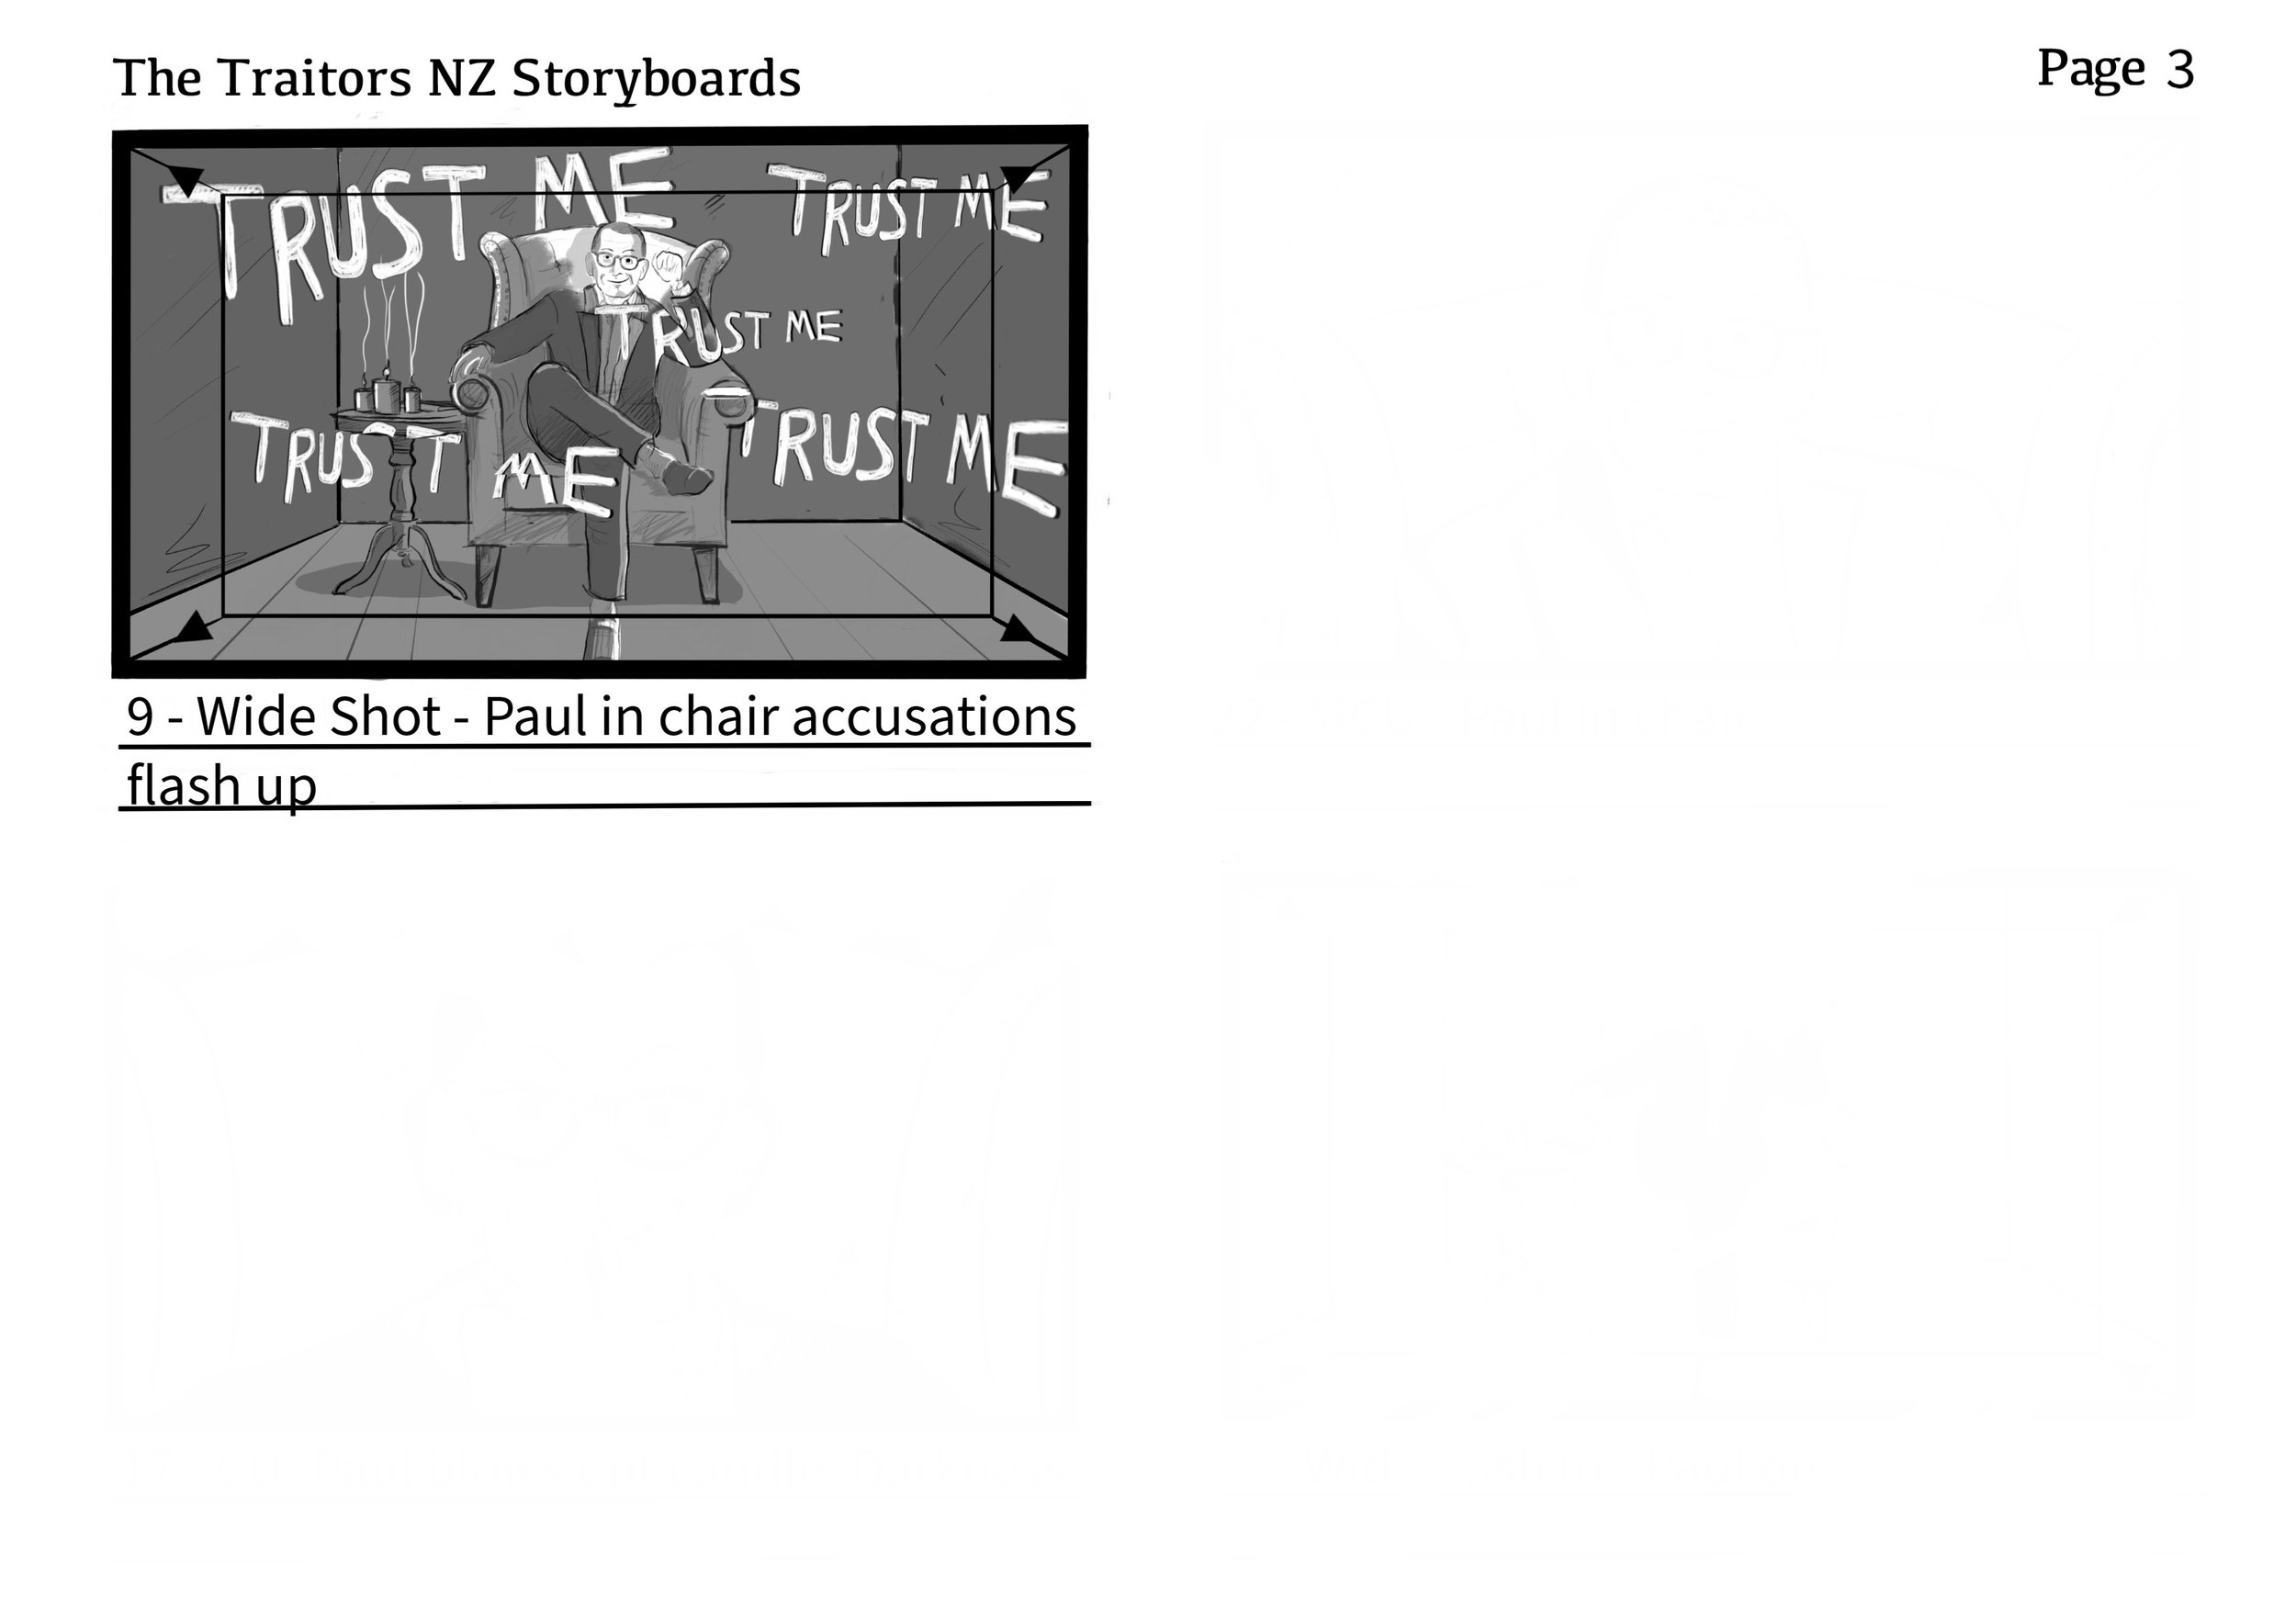 TRAITORS NZ STORYBOARD -page3.jpg